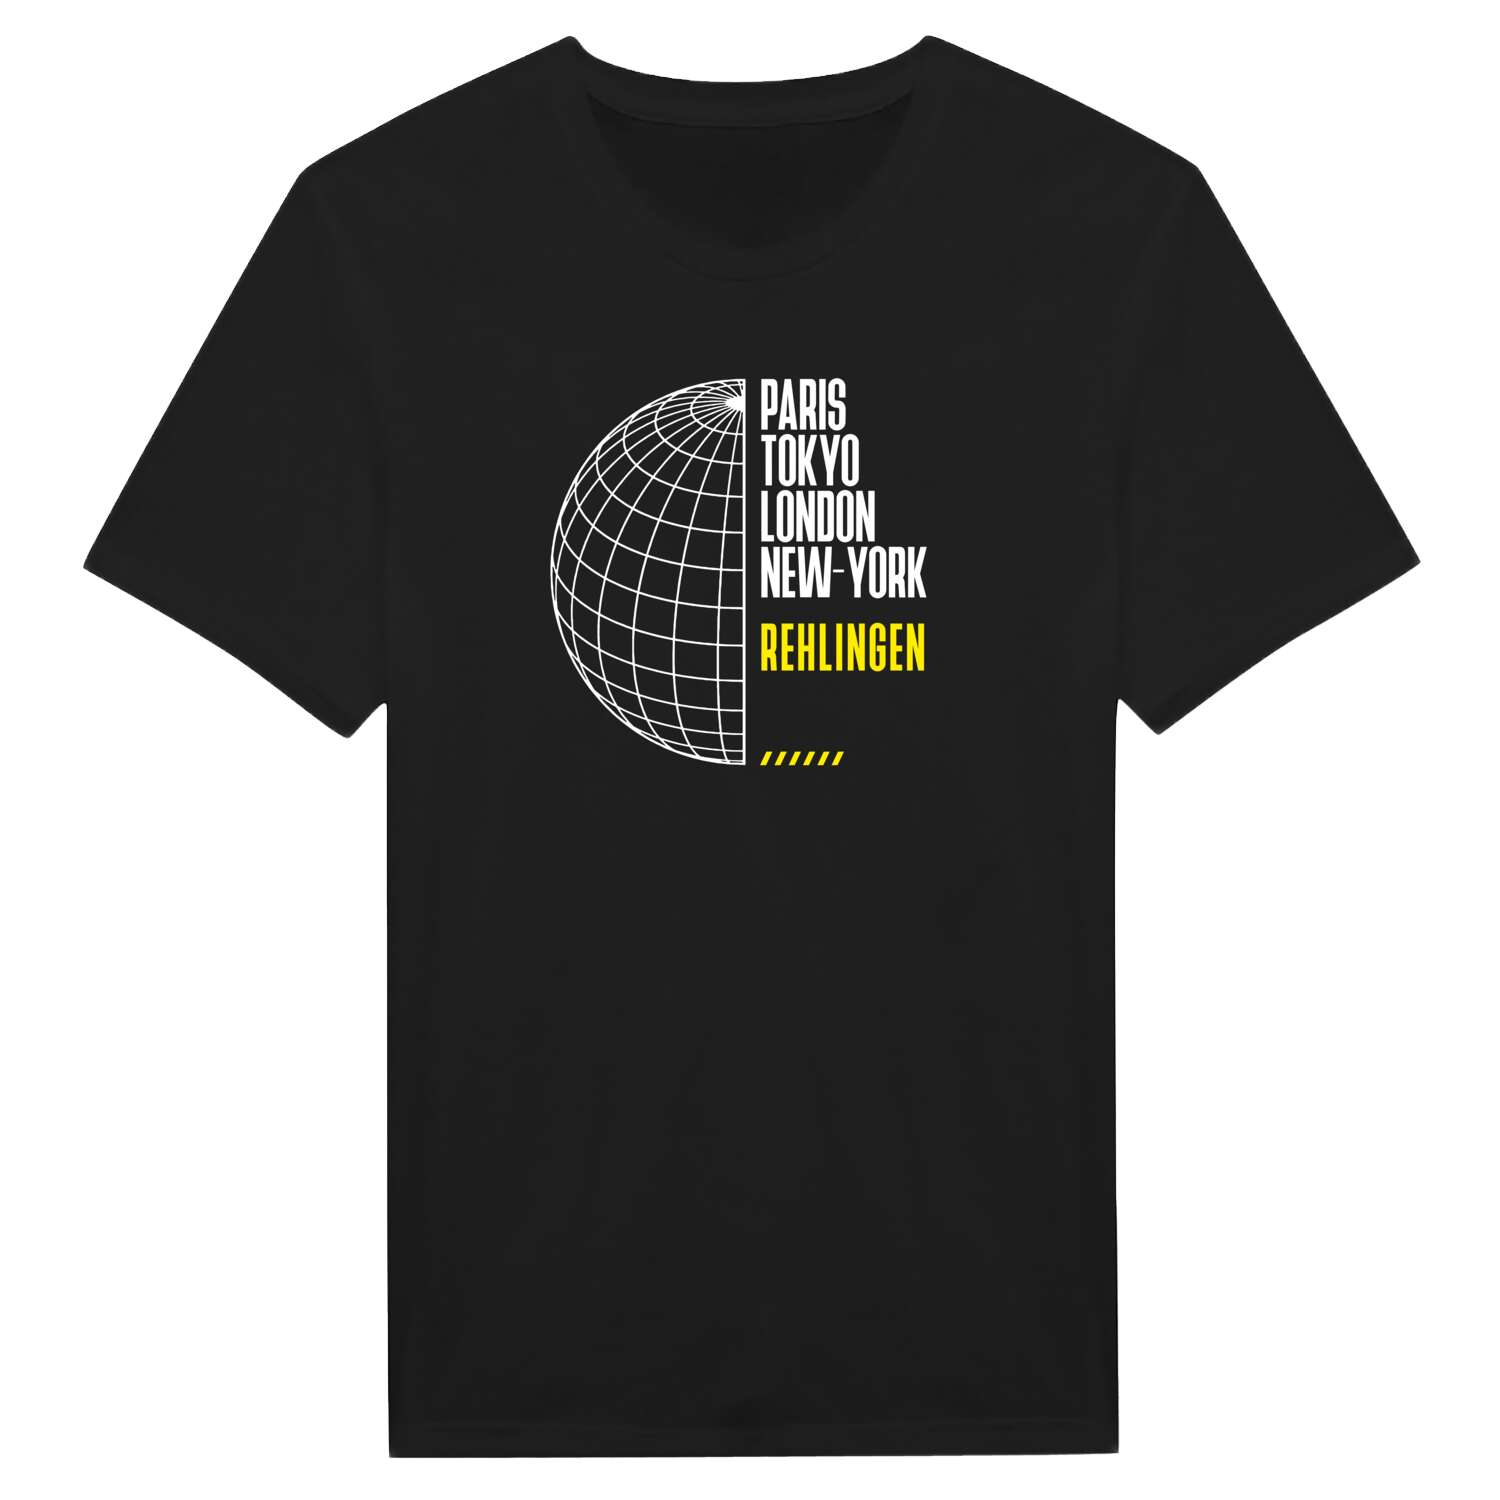 Rehlingen T-Shirt »Paris Tokyo London«